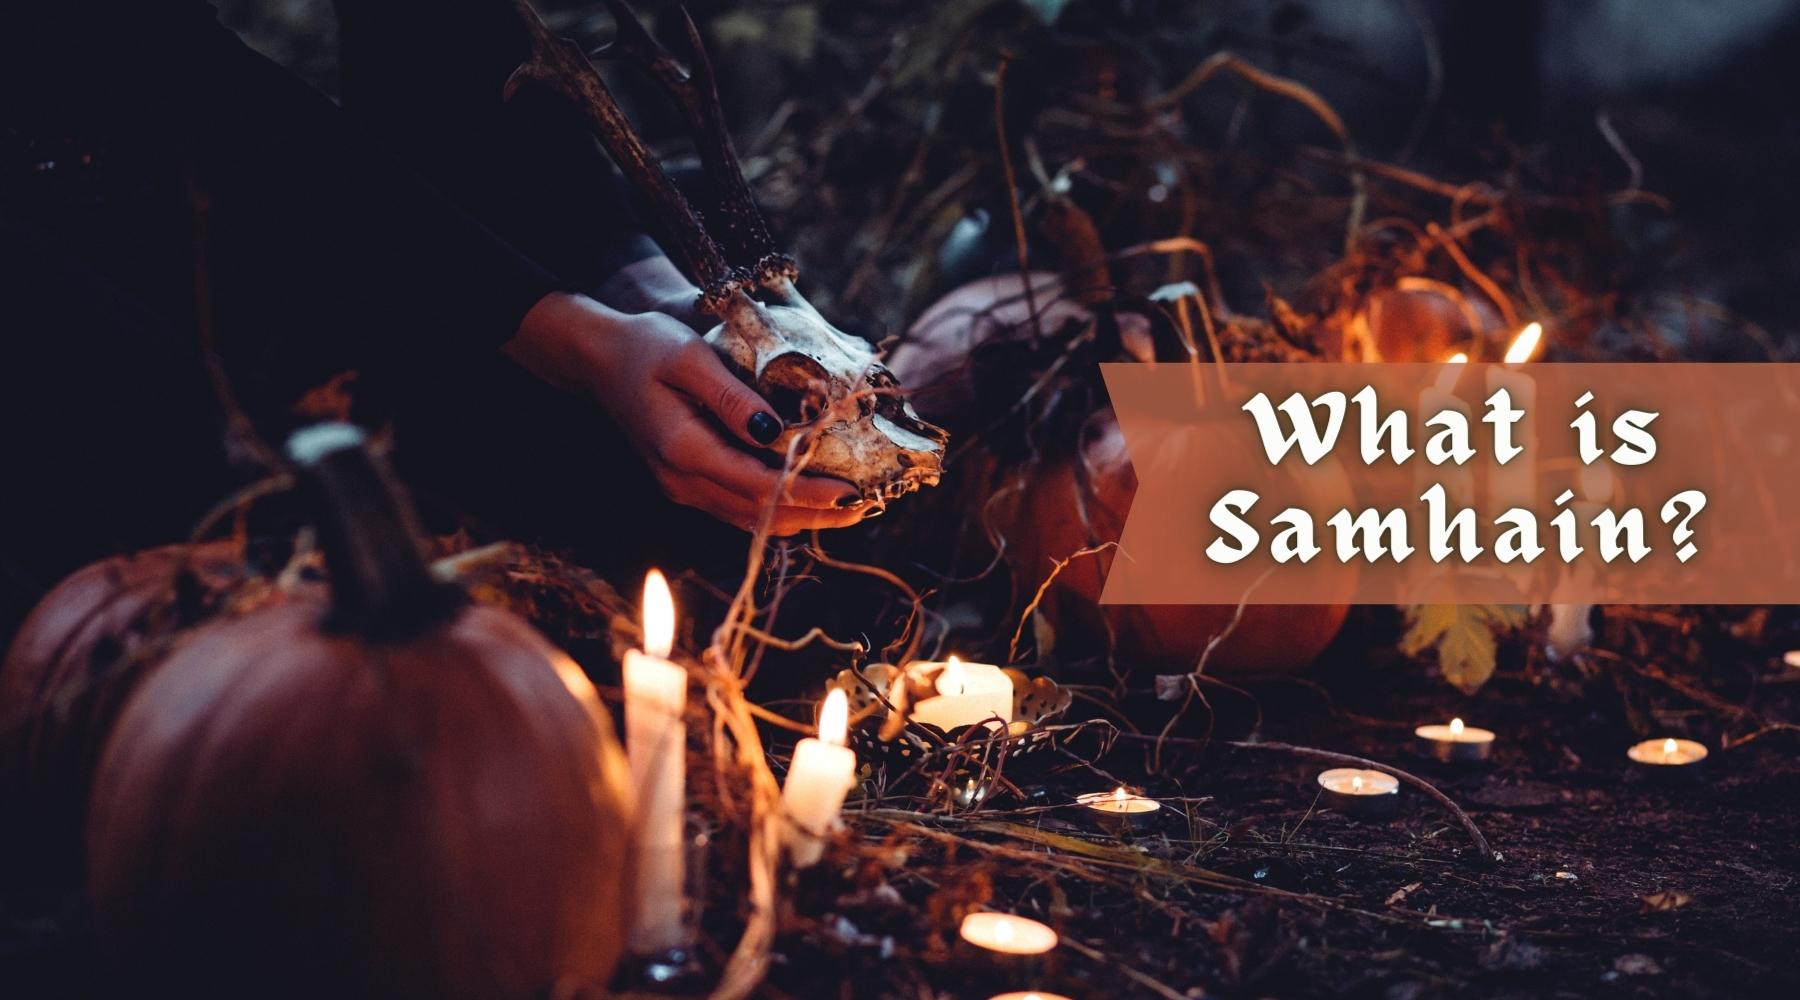 What is Samhain?